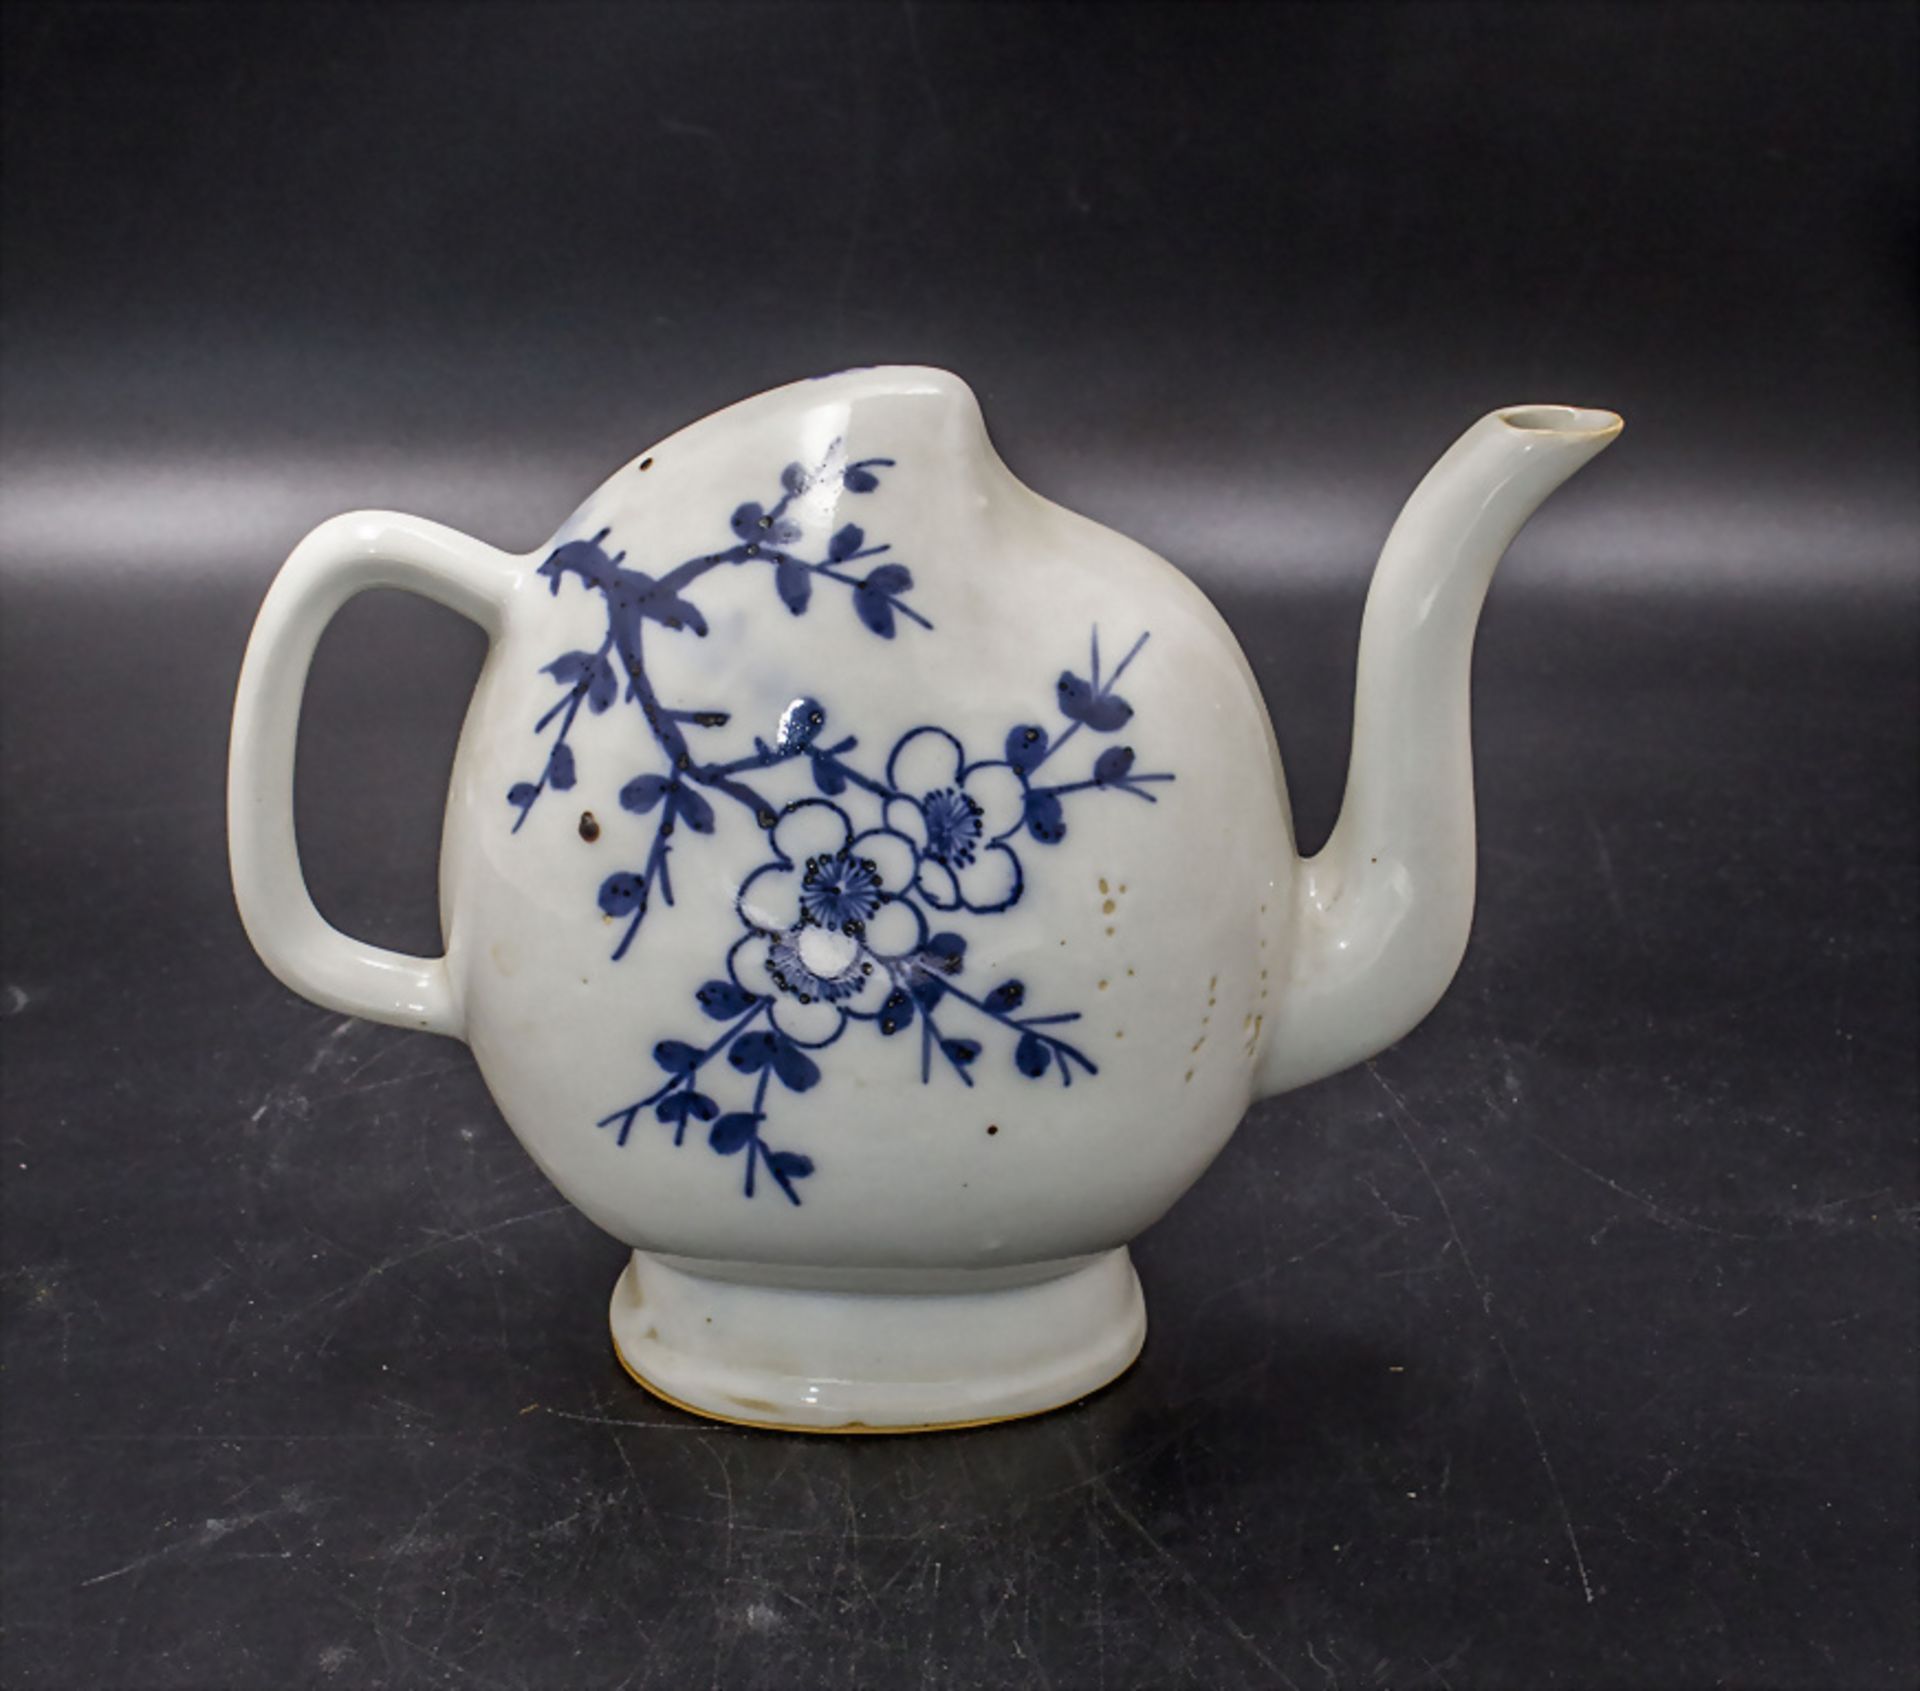 Glückspfirsich-Weinkanne / A lucky peach wine jug, China, Qing-Dynastie (1644-1911), 18./19. Jh. - Image 3 of 4